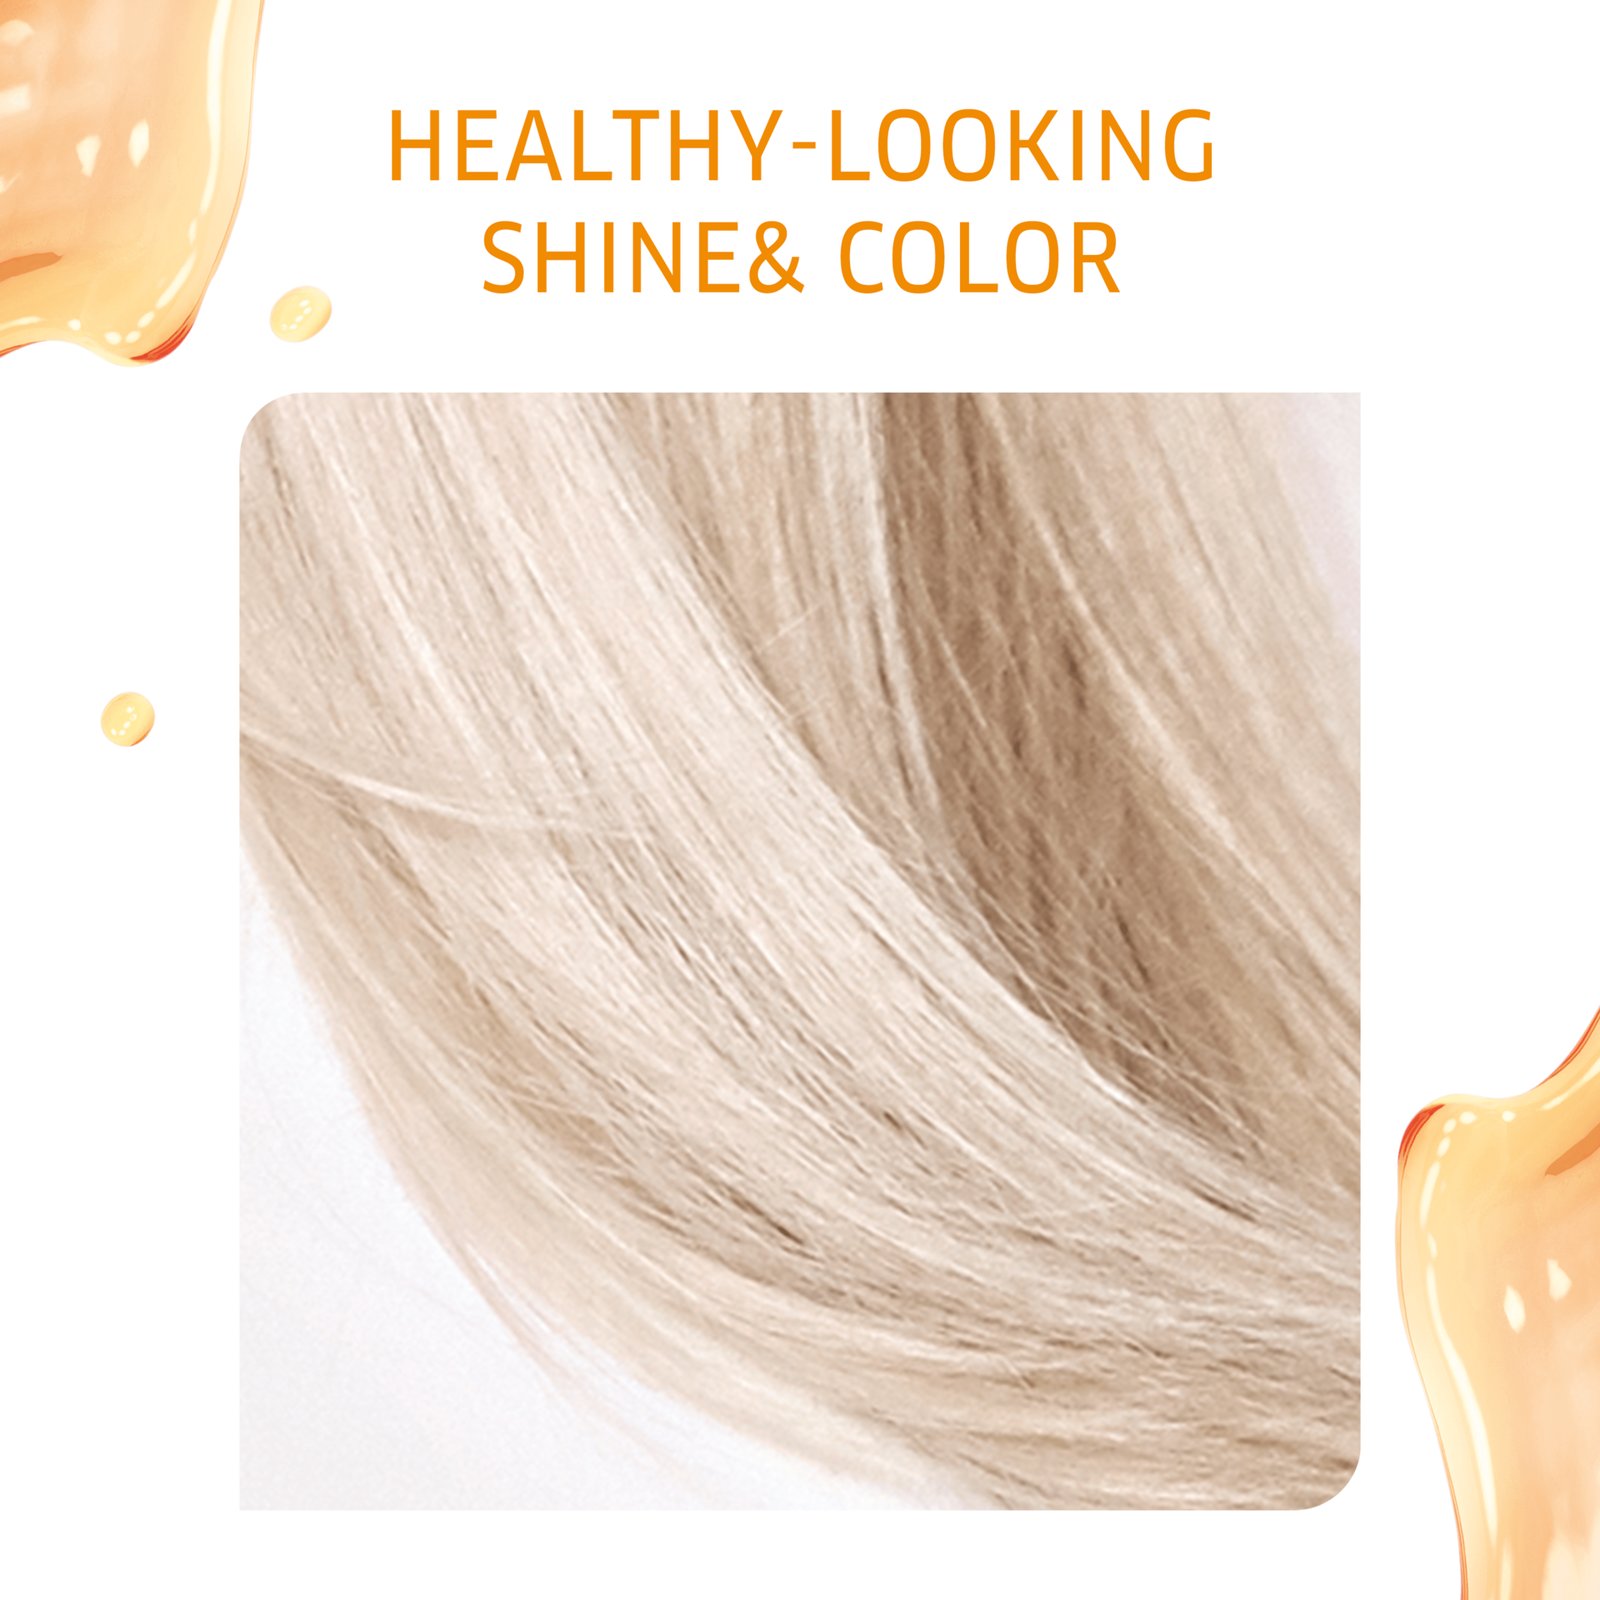 Wella Professionals Color Fresh 10/39 Lightest Gold Cendre Blonde 75 ml